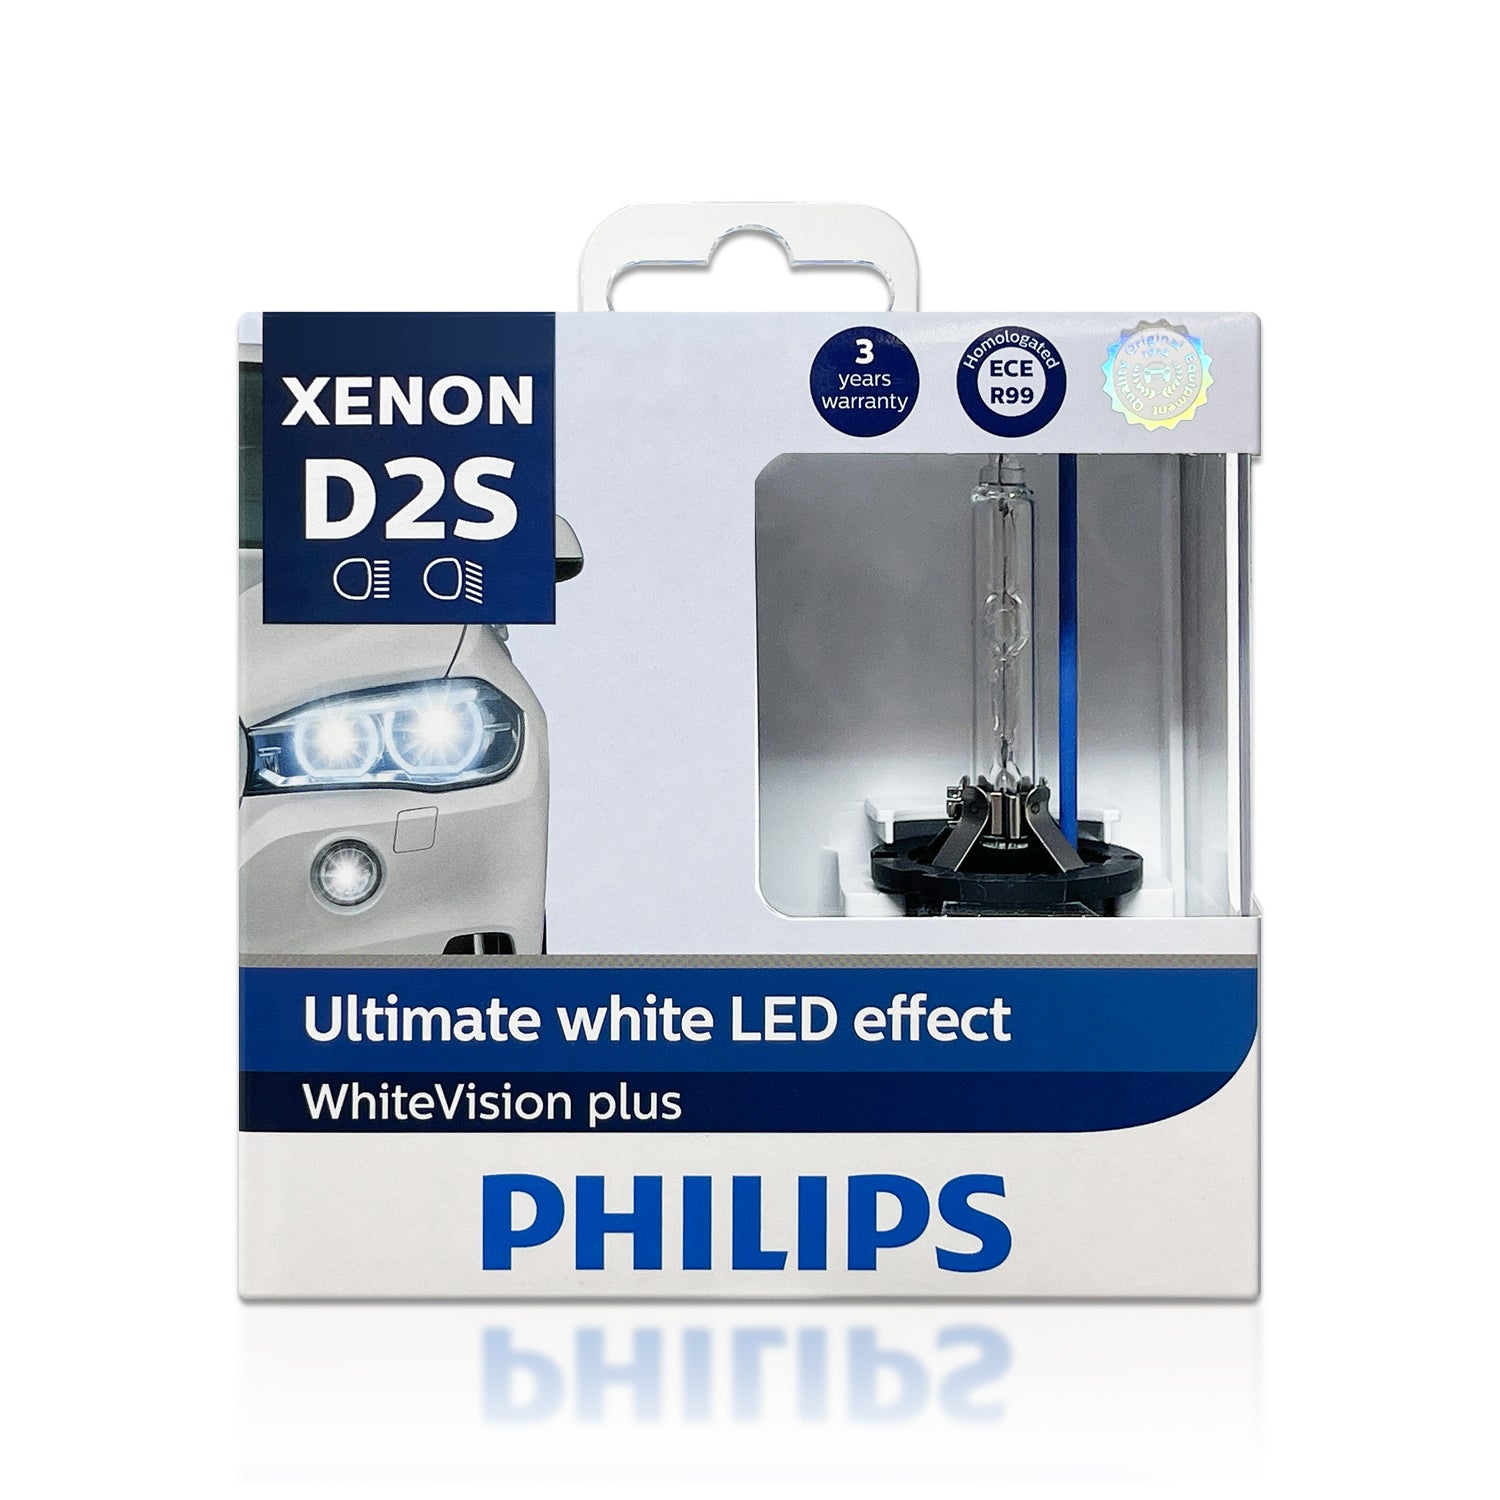 D2S: Philips 85122 WHV2 White Vision 6000K HID Bulbs